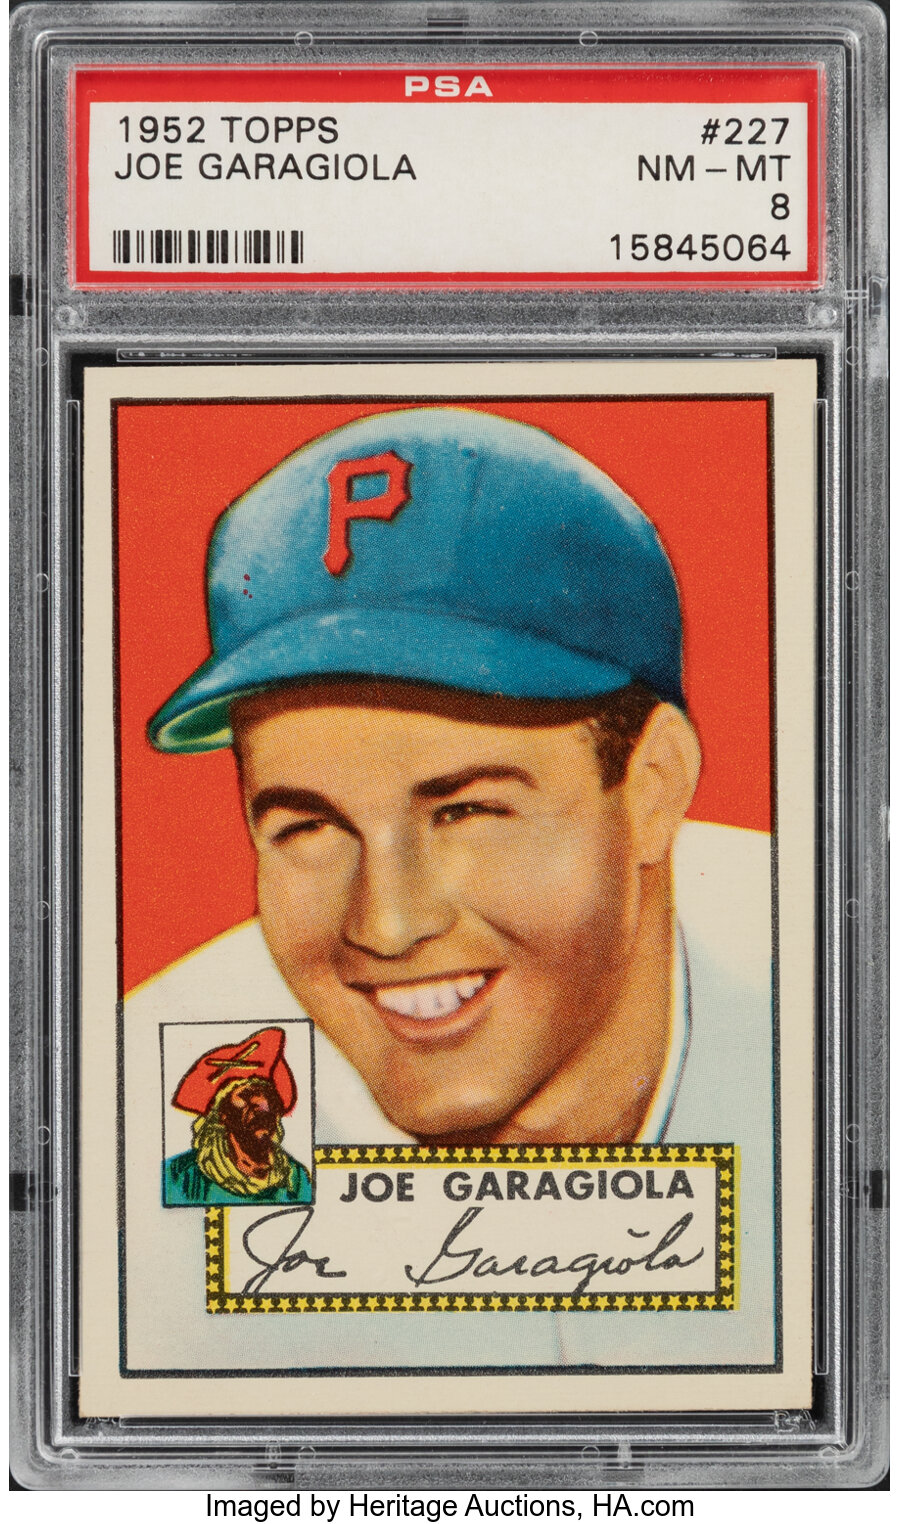 1952 Topps Joe Garagiola #227 PSA NM-MT 8